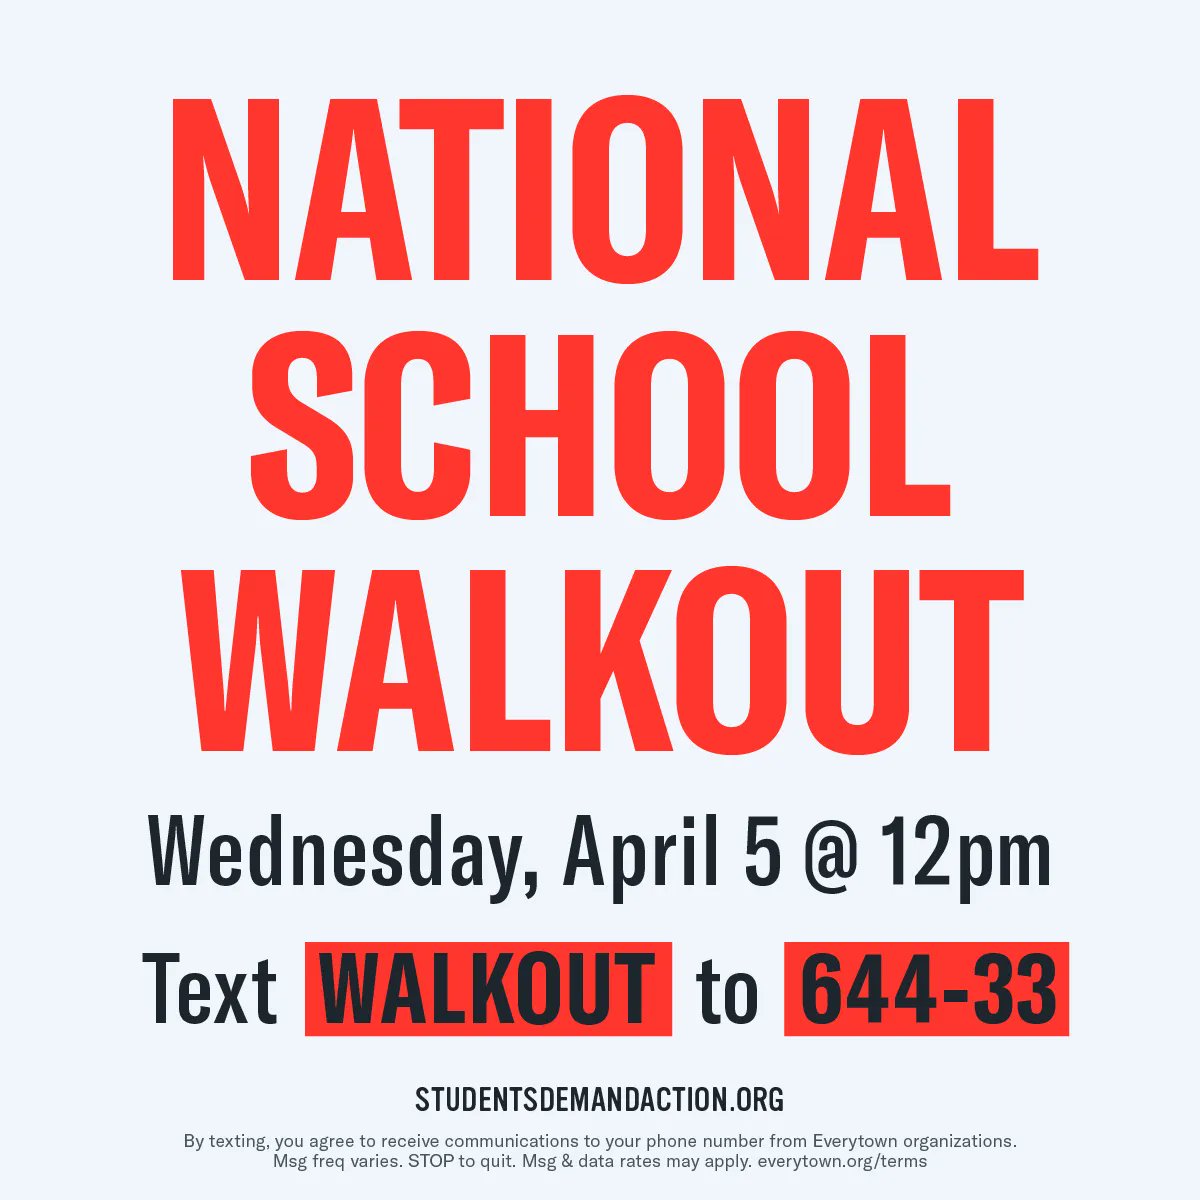 #NationalSchoolWalkout #StudentsDemandAction #ProtestGunViolence #Walkout #SchoolShootings #SandyHook #Florida #PermitlessCarry #Parkland